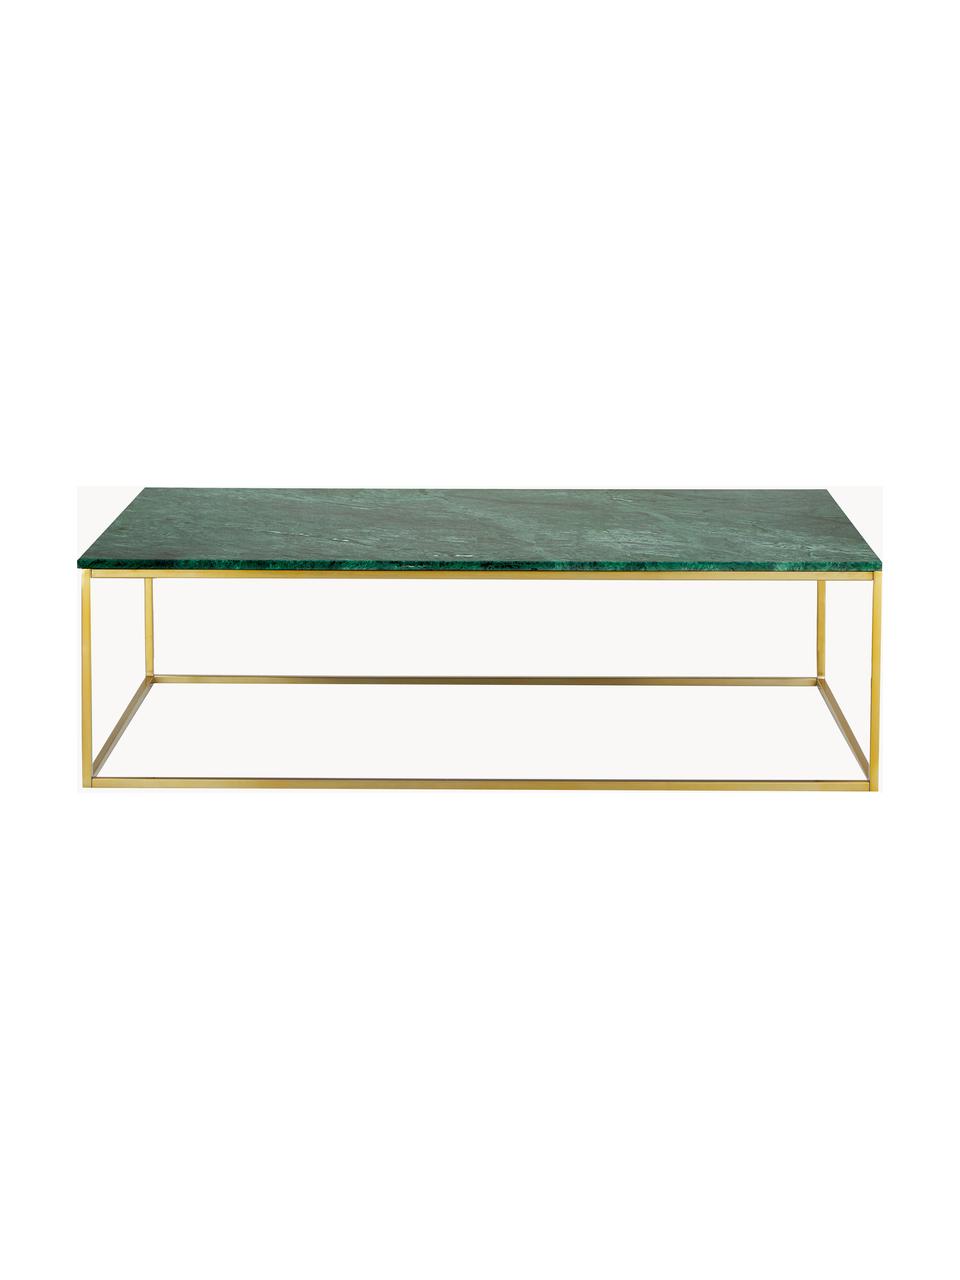 Grande table basse en marbre Alys, Vert, marbré, doré, larg. 120 x prof. 75 cm